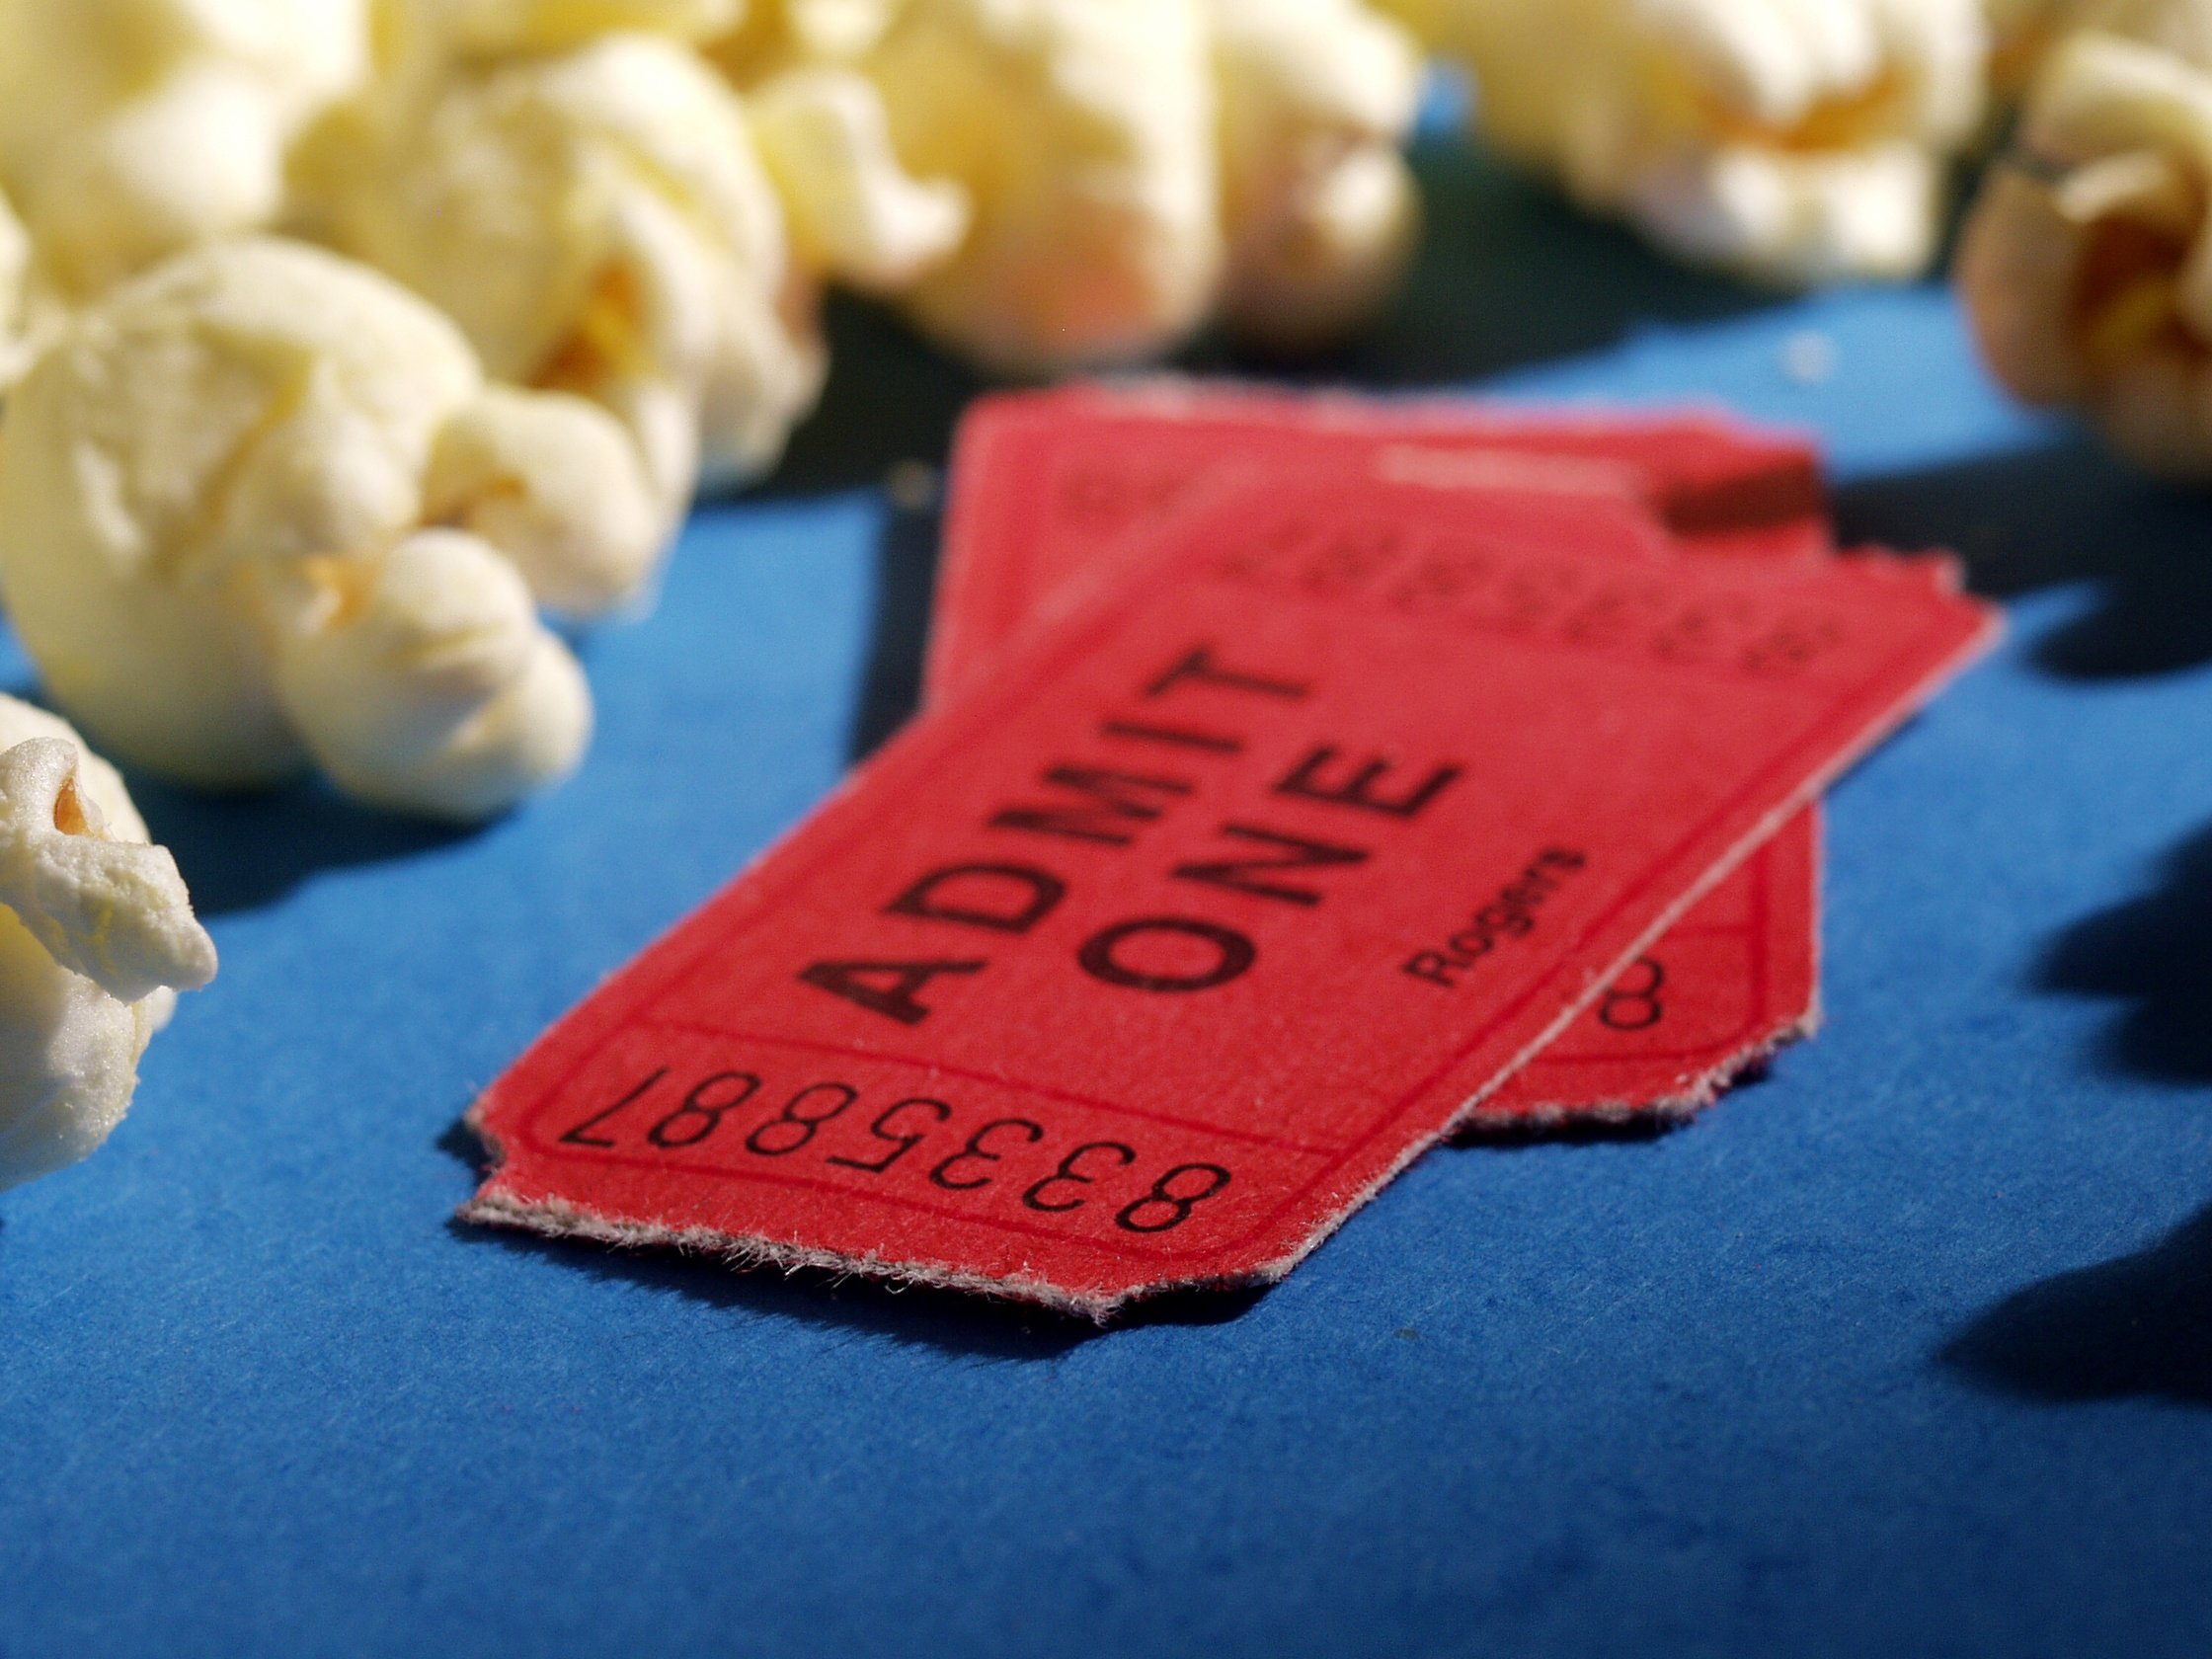 20 Delicious Popcorn Recipes that Will Make Your Movie Night More Delightful